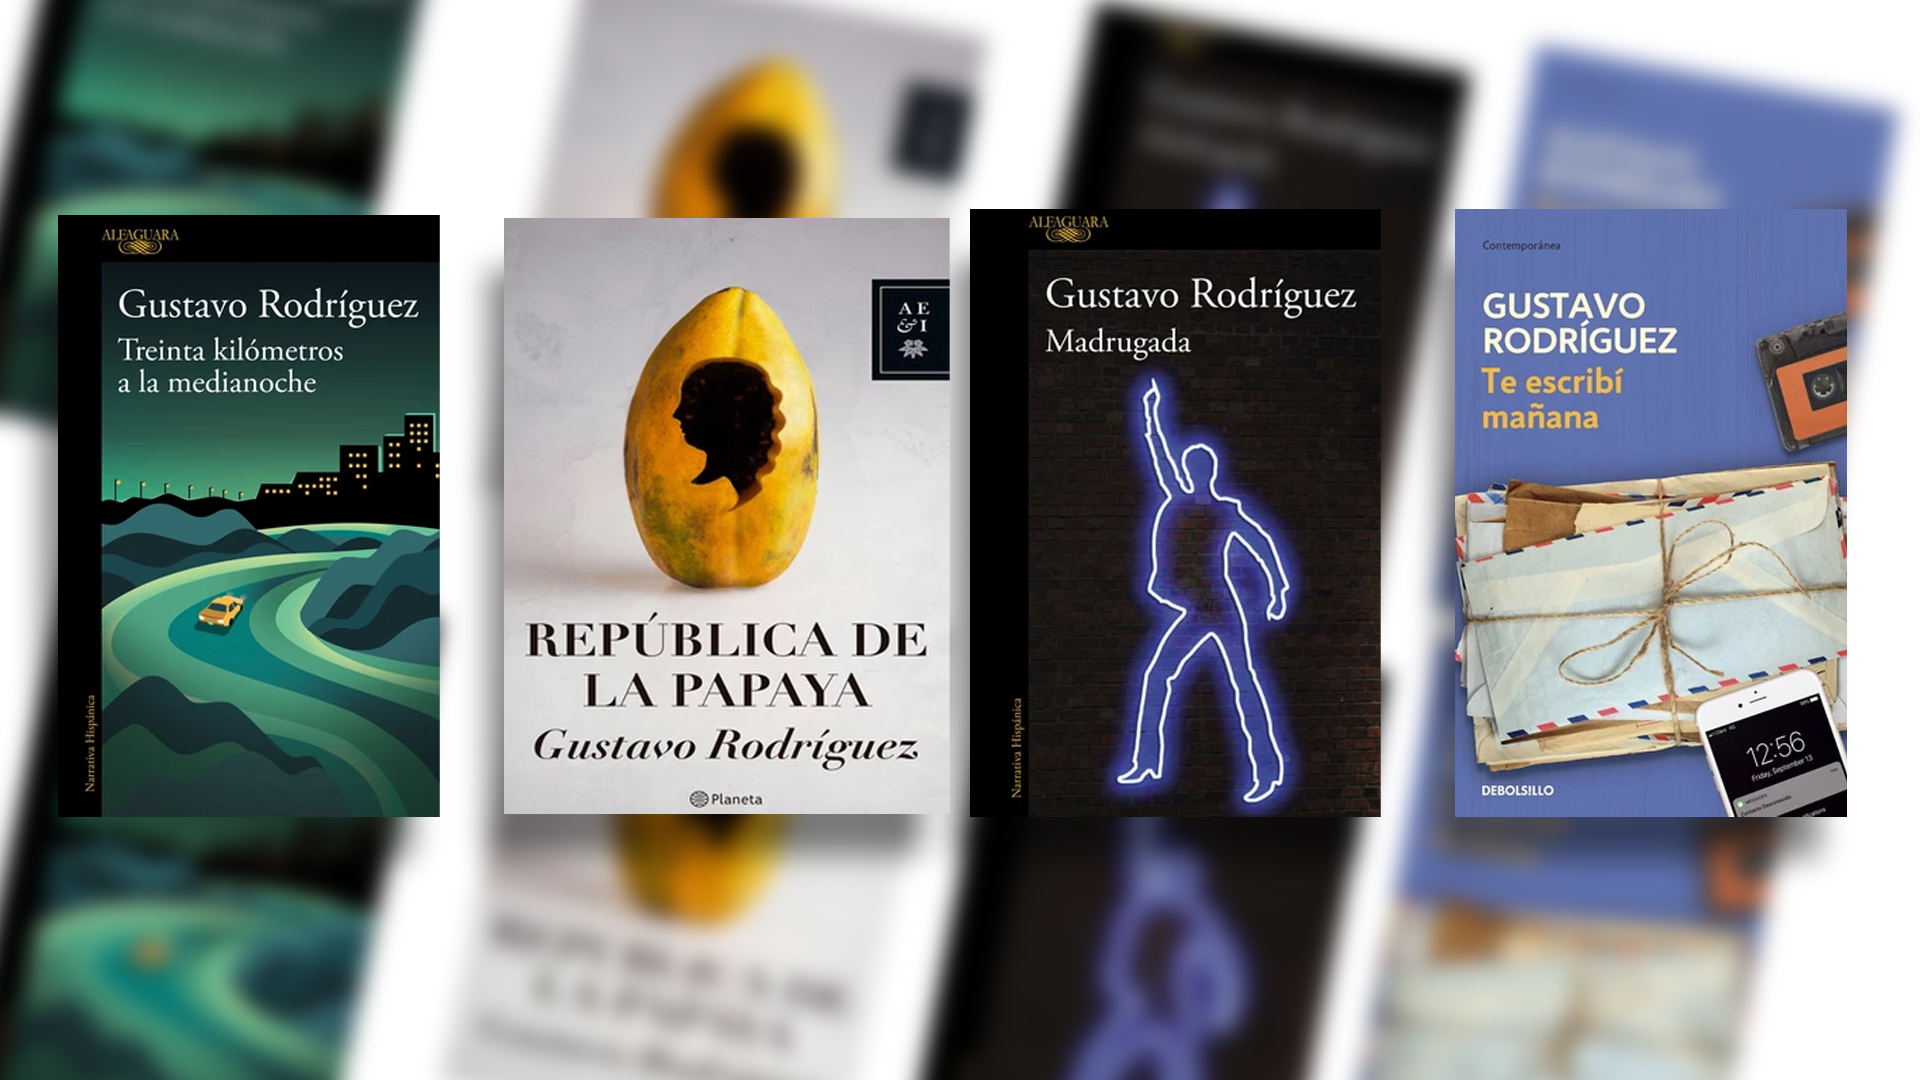 Some of Gustavo Rodríguez's books